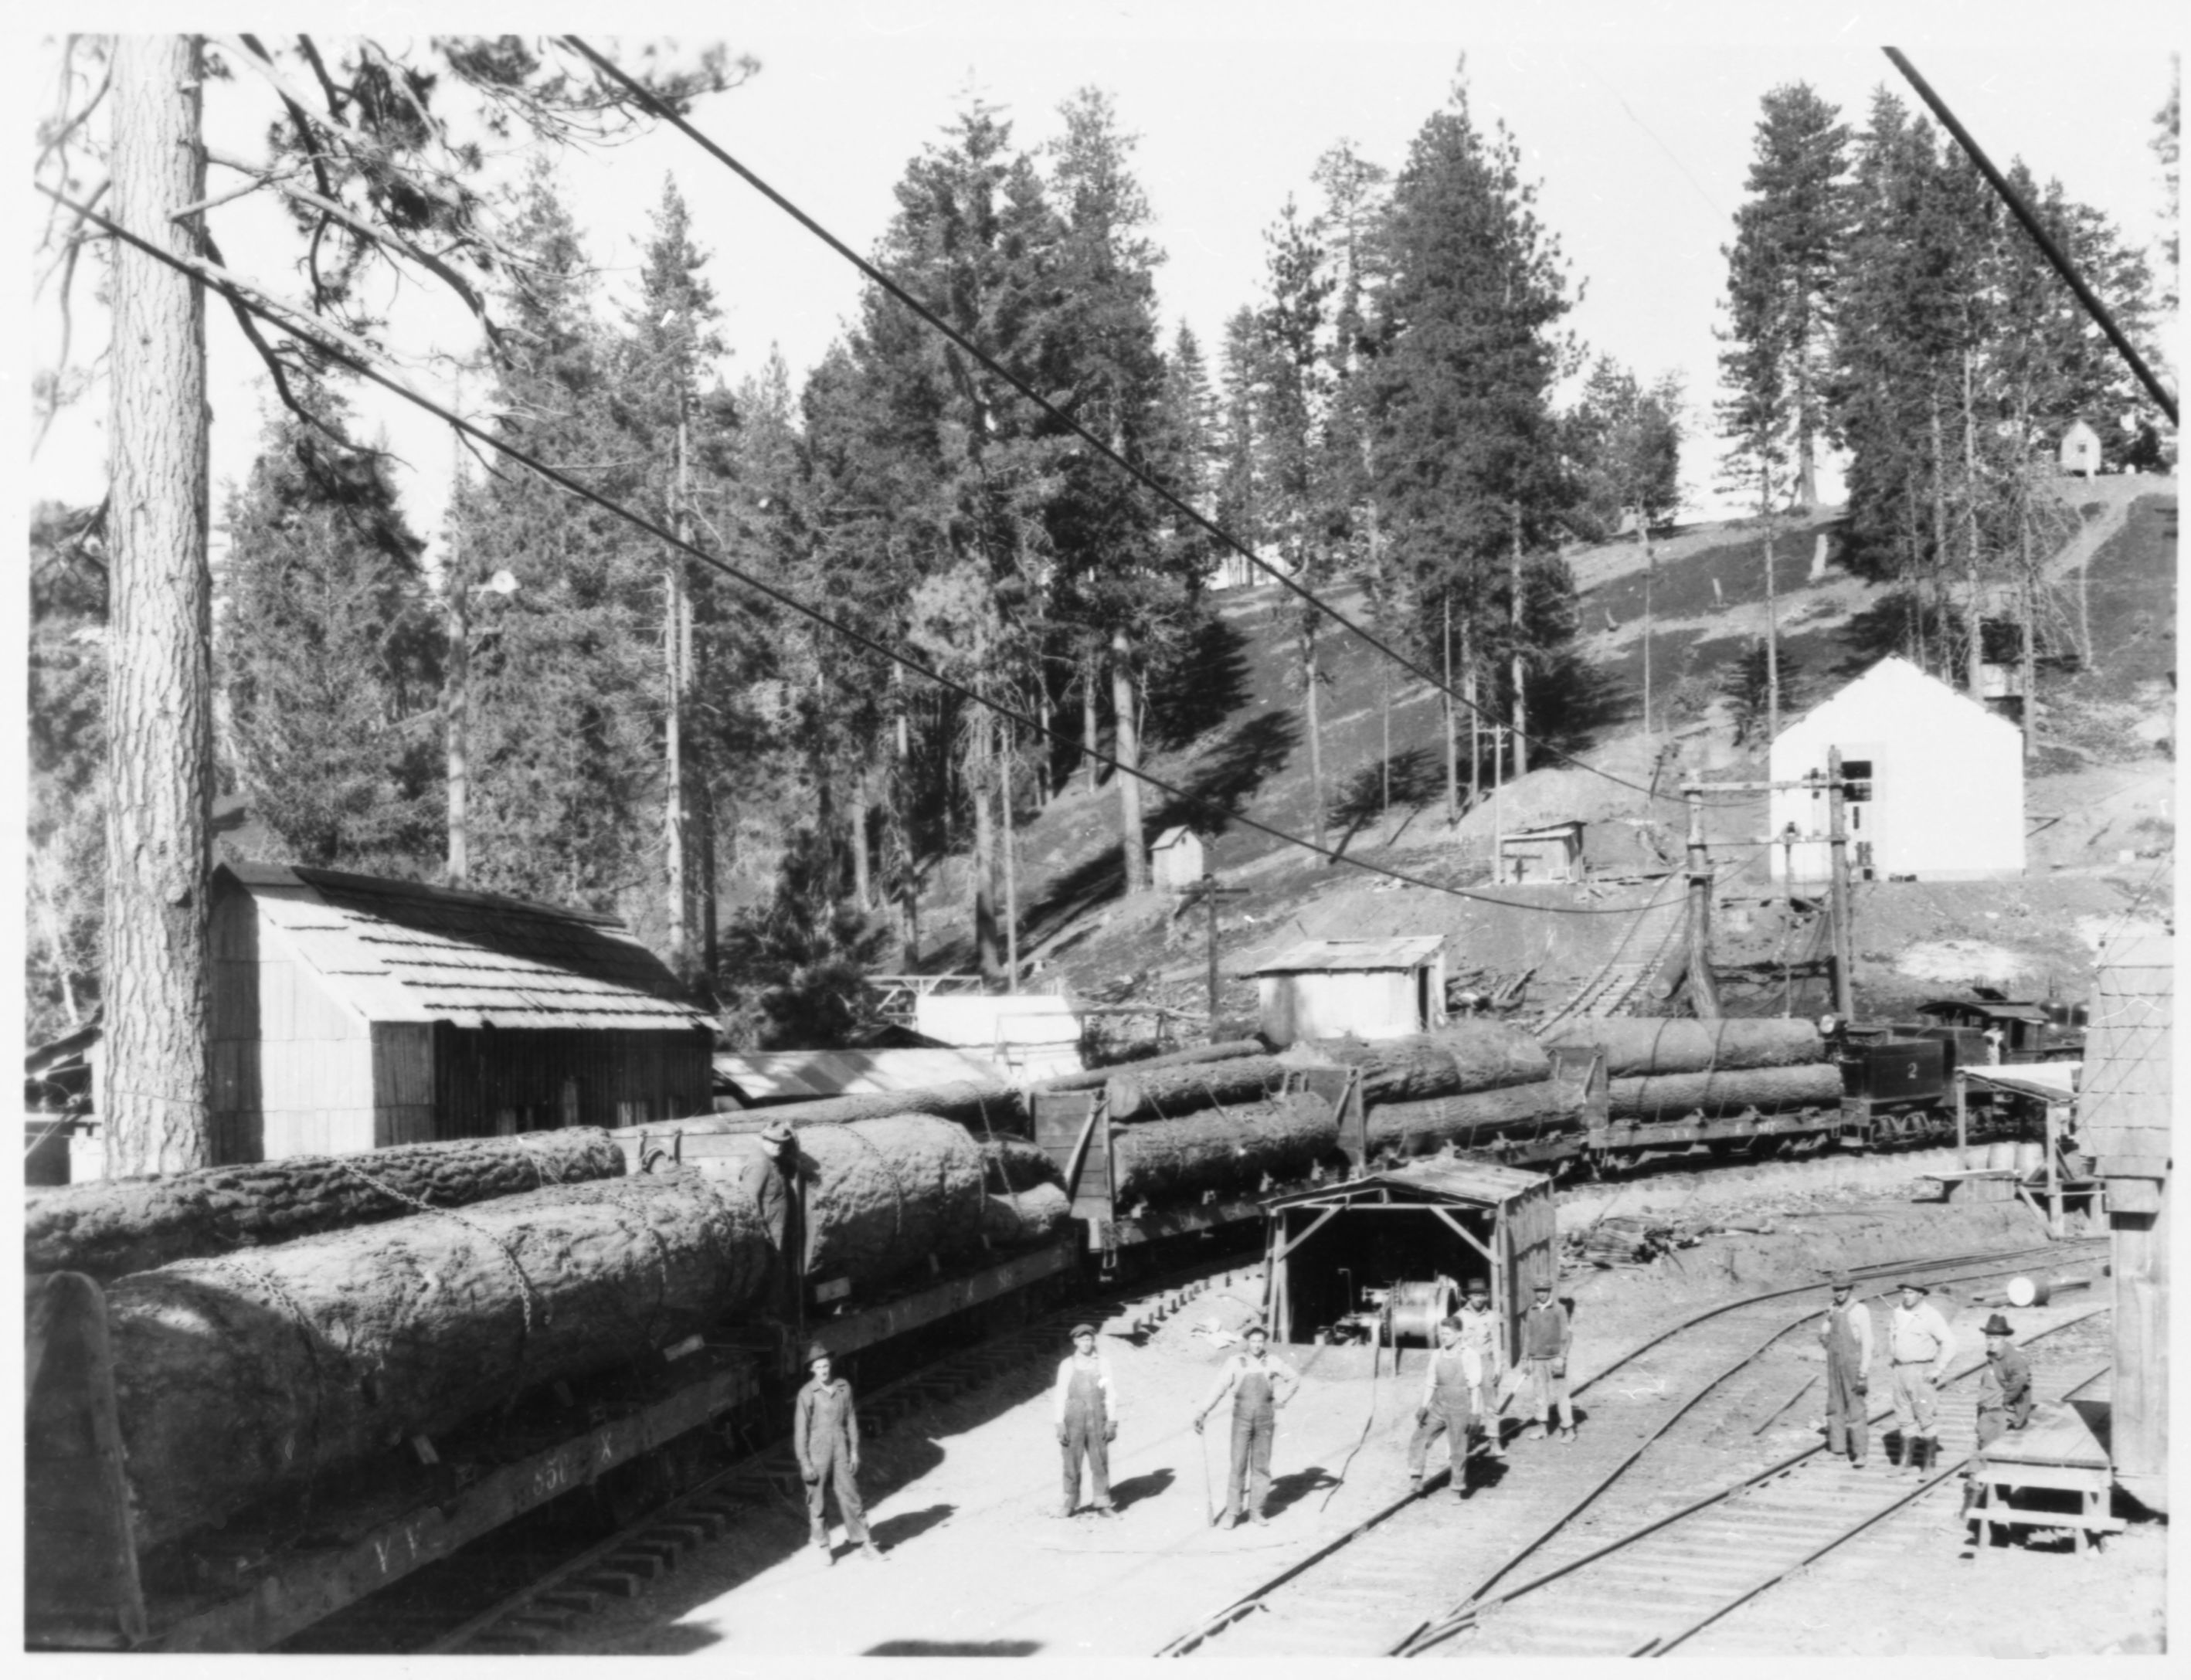 Copy Neg: J. Ernest, 1983. Yosemite Valley Railroad. From negative in file of Al Rose. Original print in over-sized photo drawl in RL.